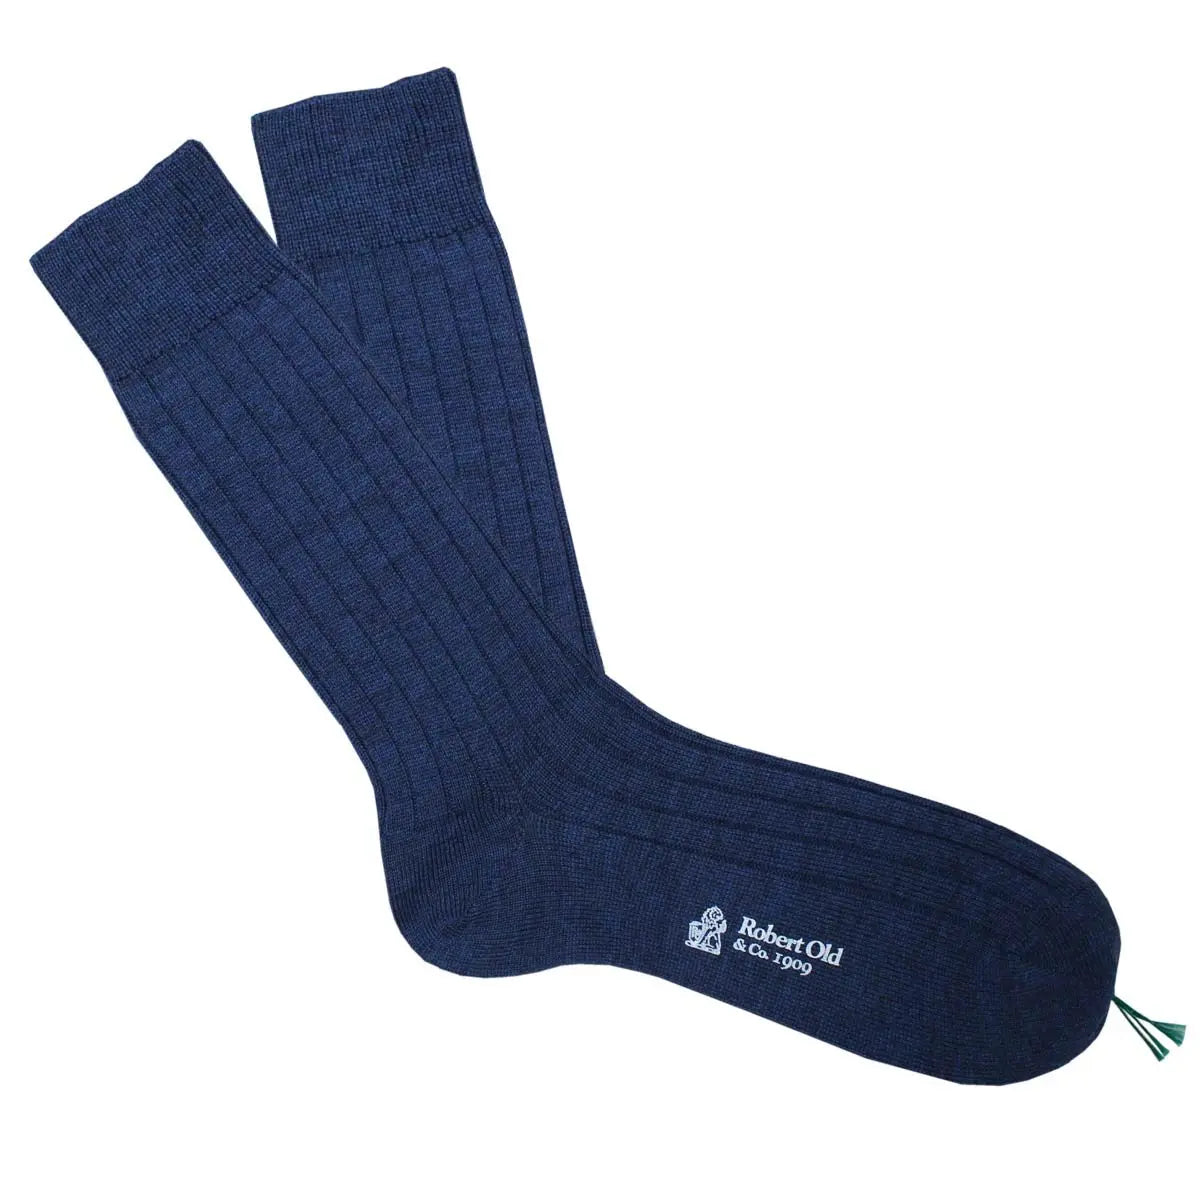 Blue Melange Wool Ribbed Socks  Robert Old   